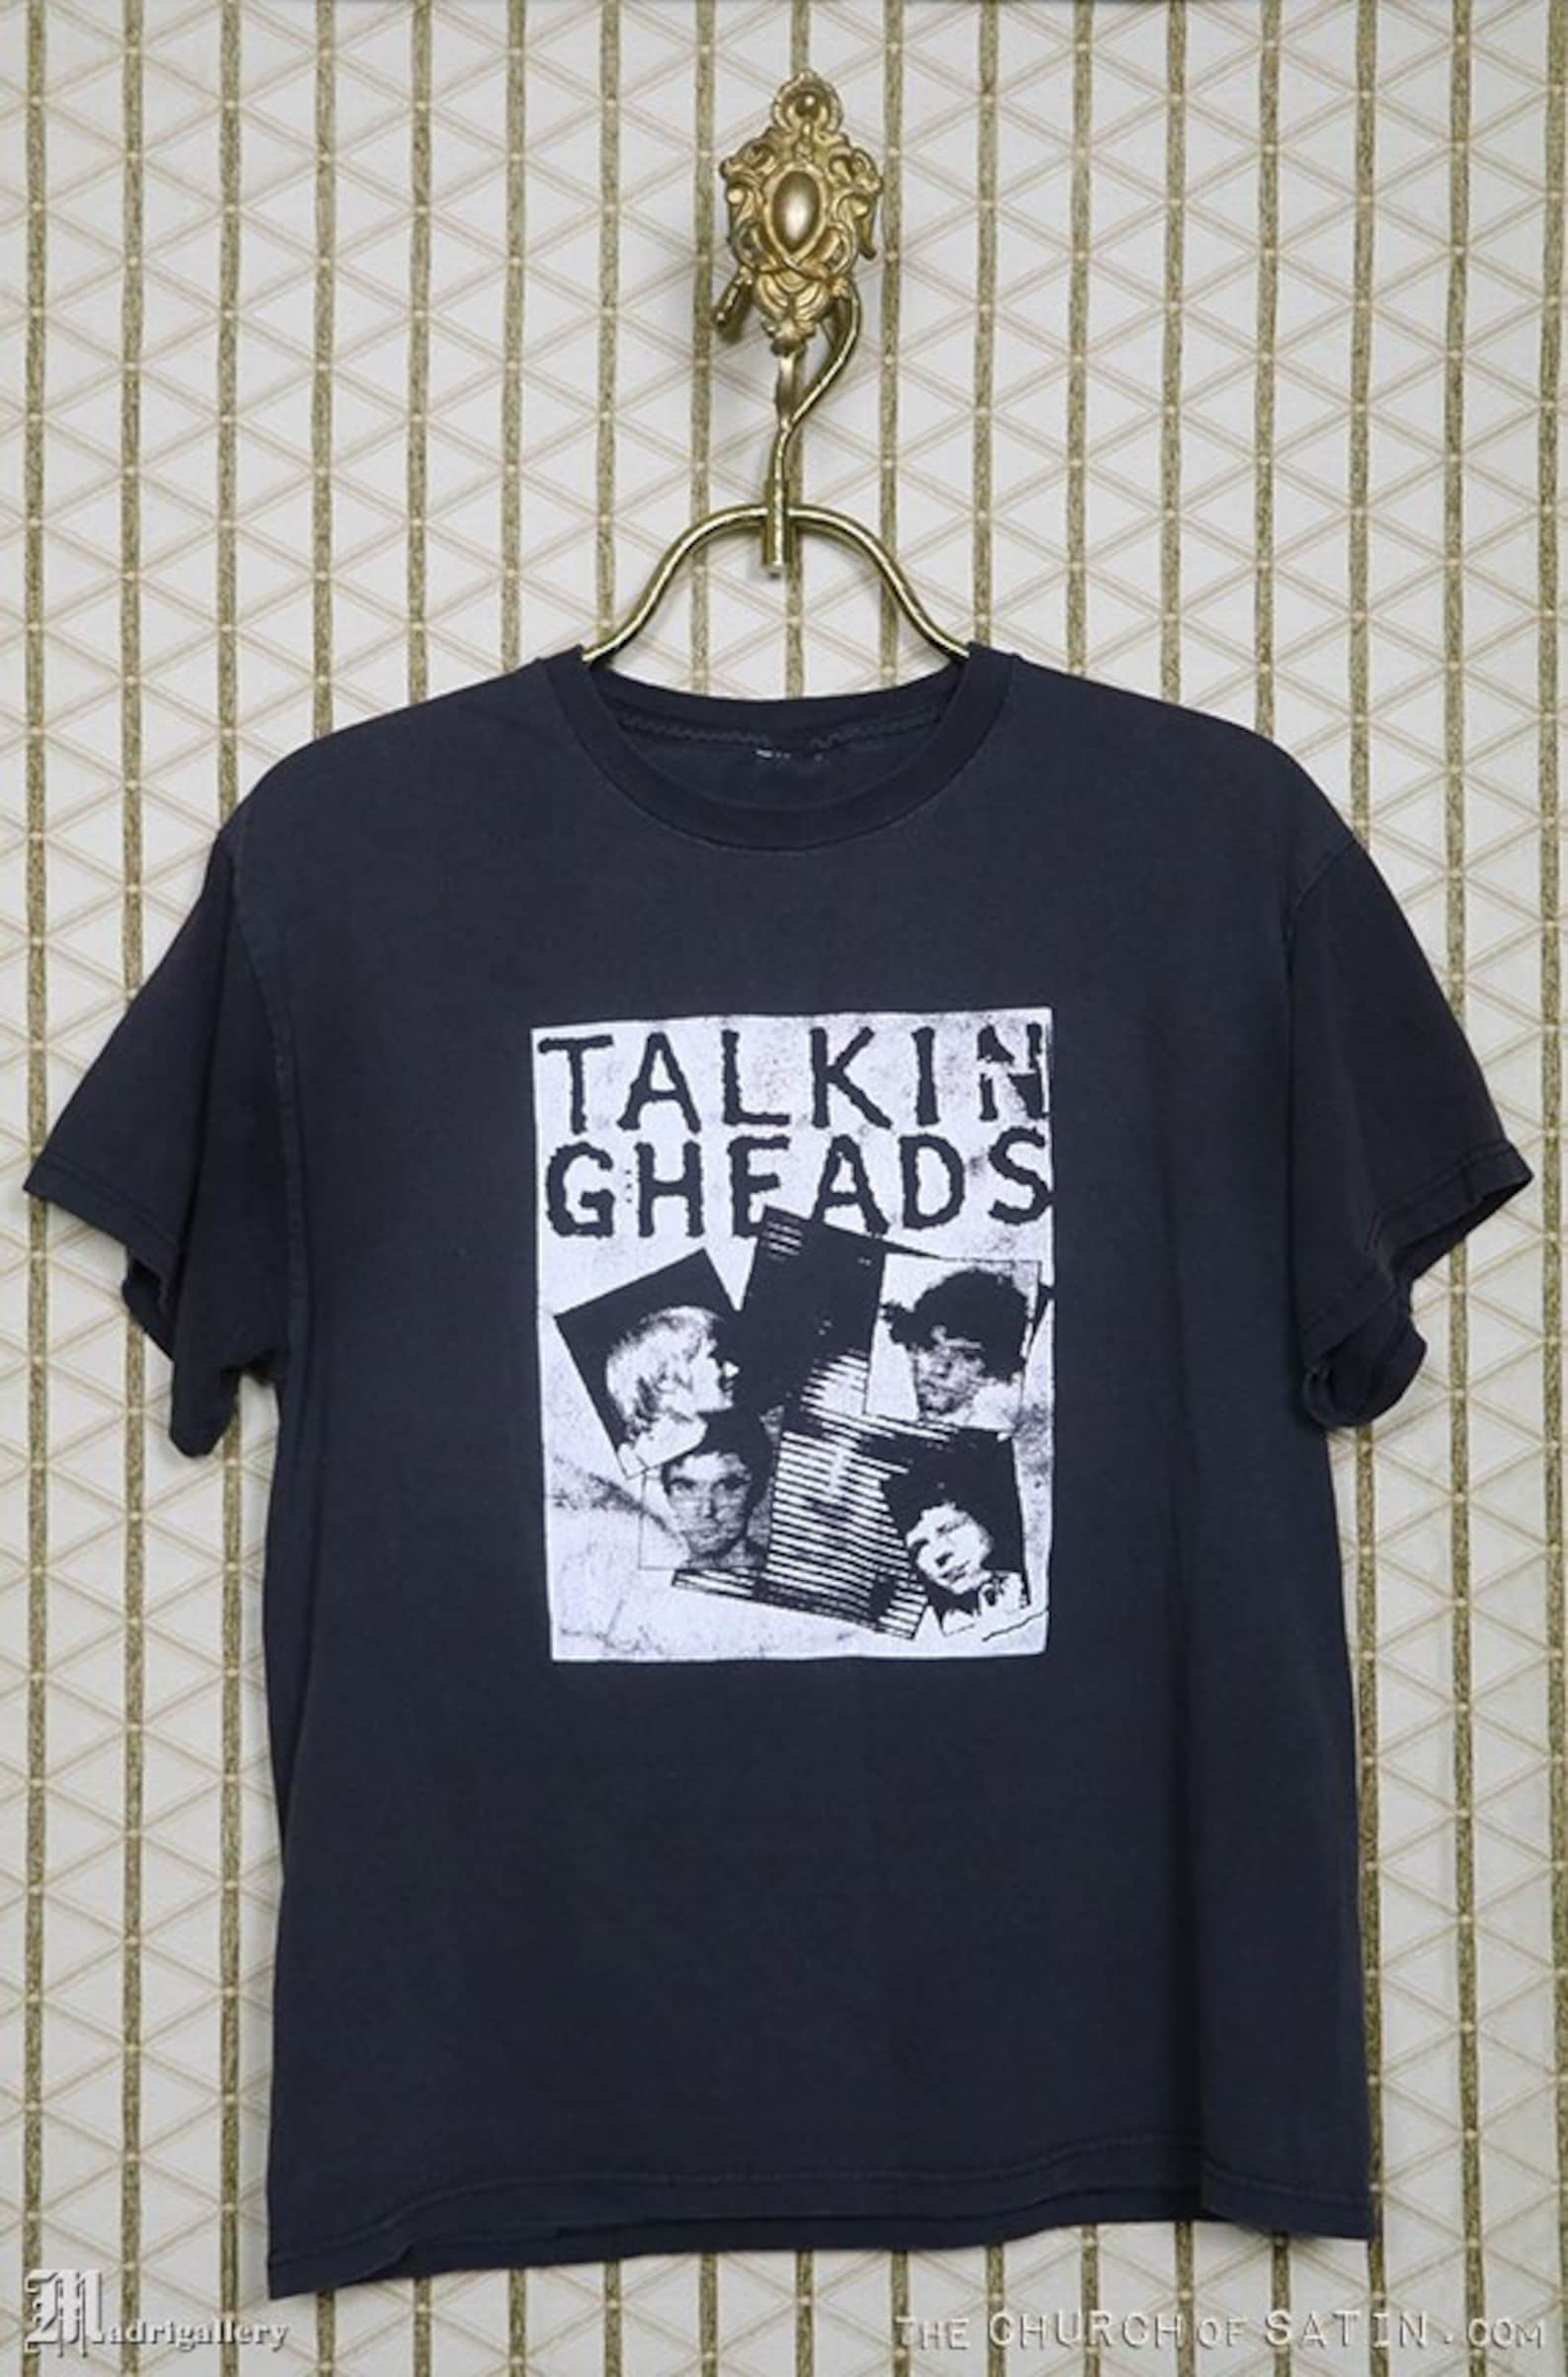 Talking Heads t-shirt vintage rare faded black tee shirt | Etsy